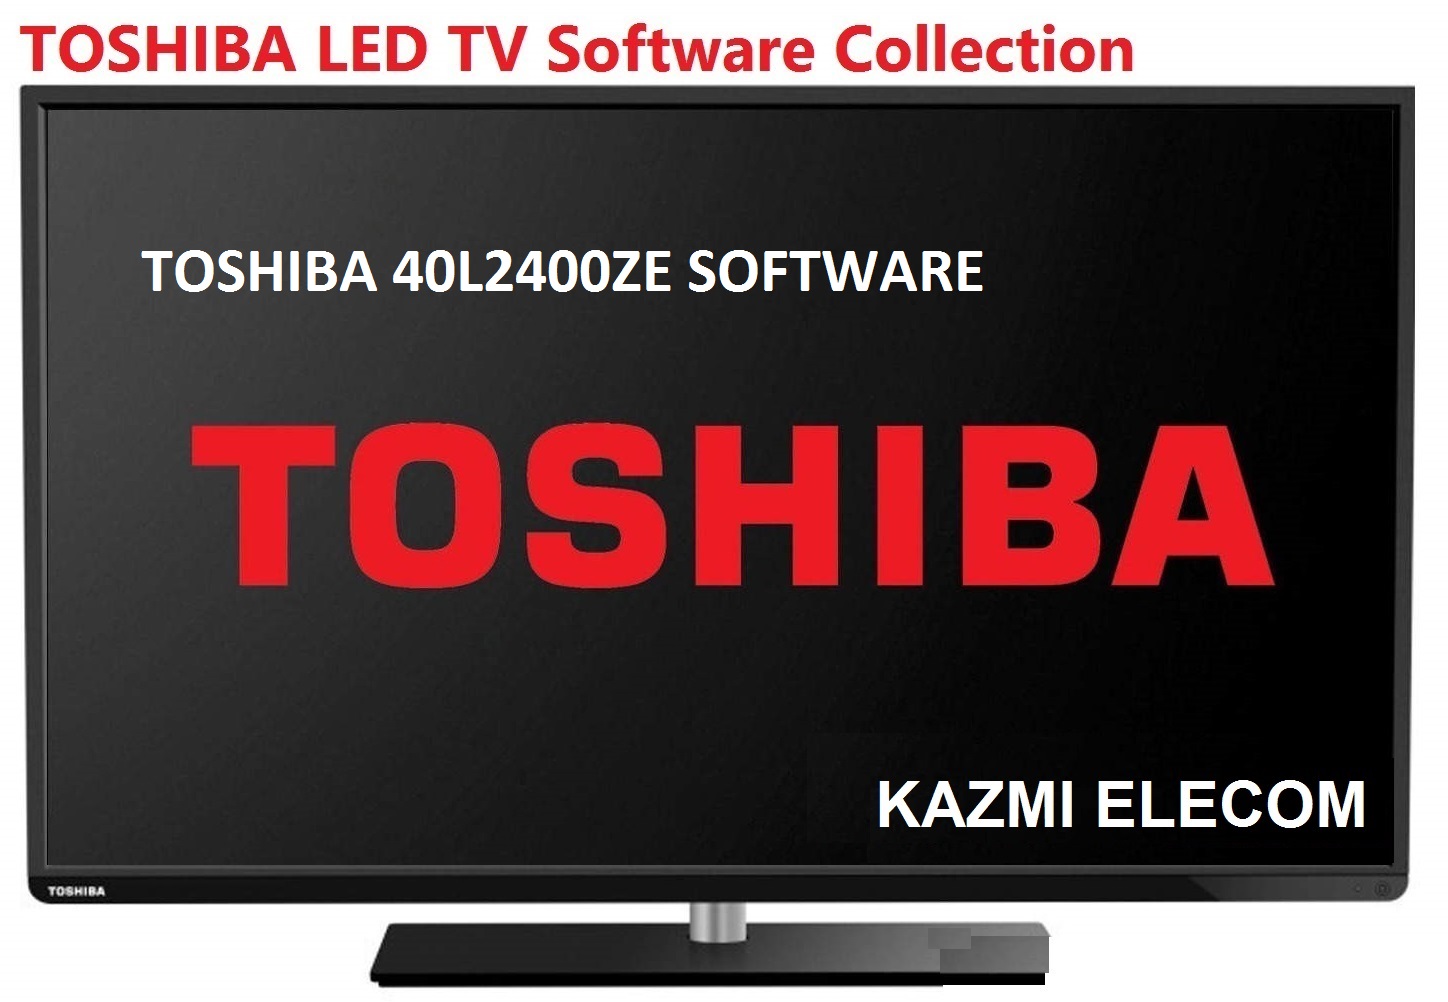 Toshiba 40L2400Ze